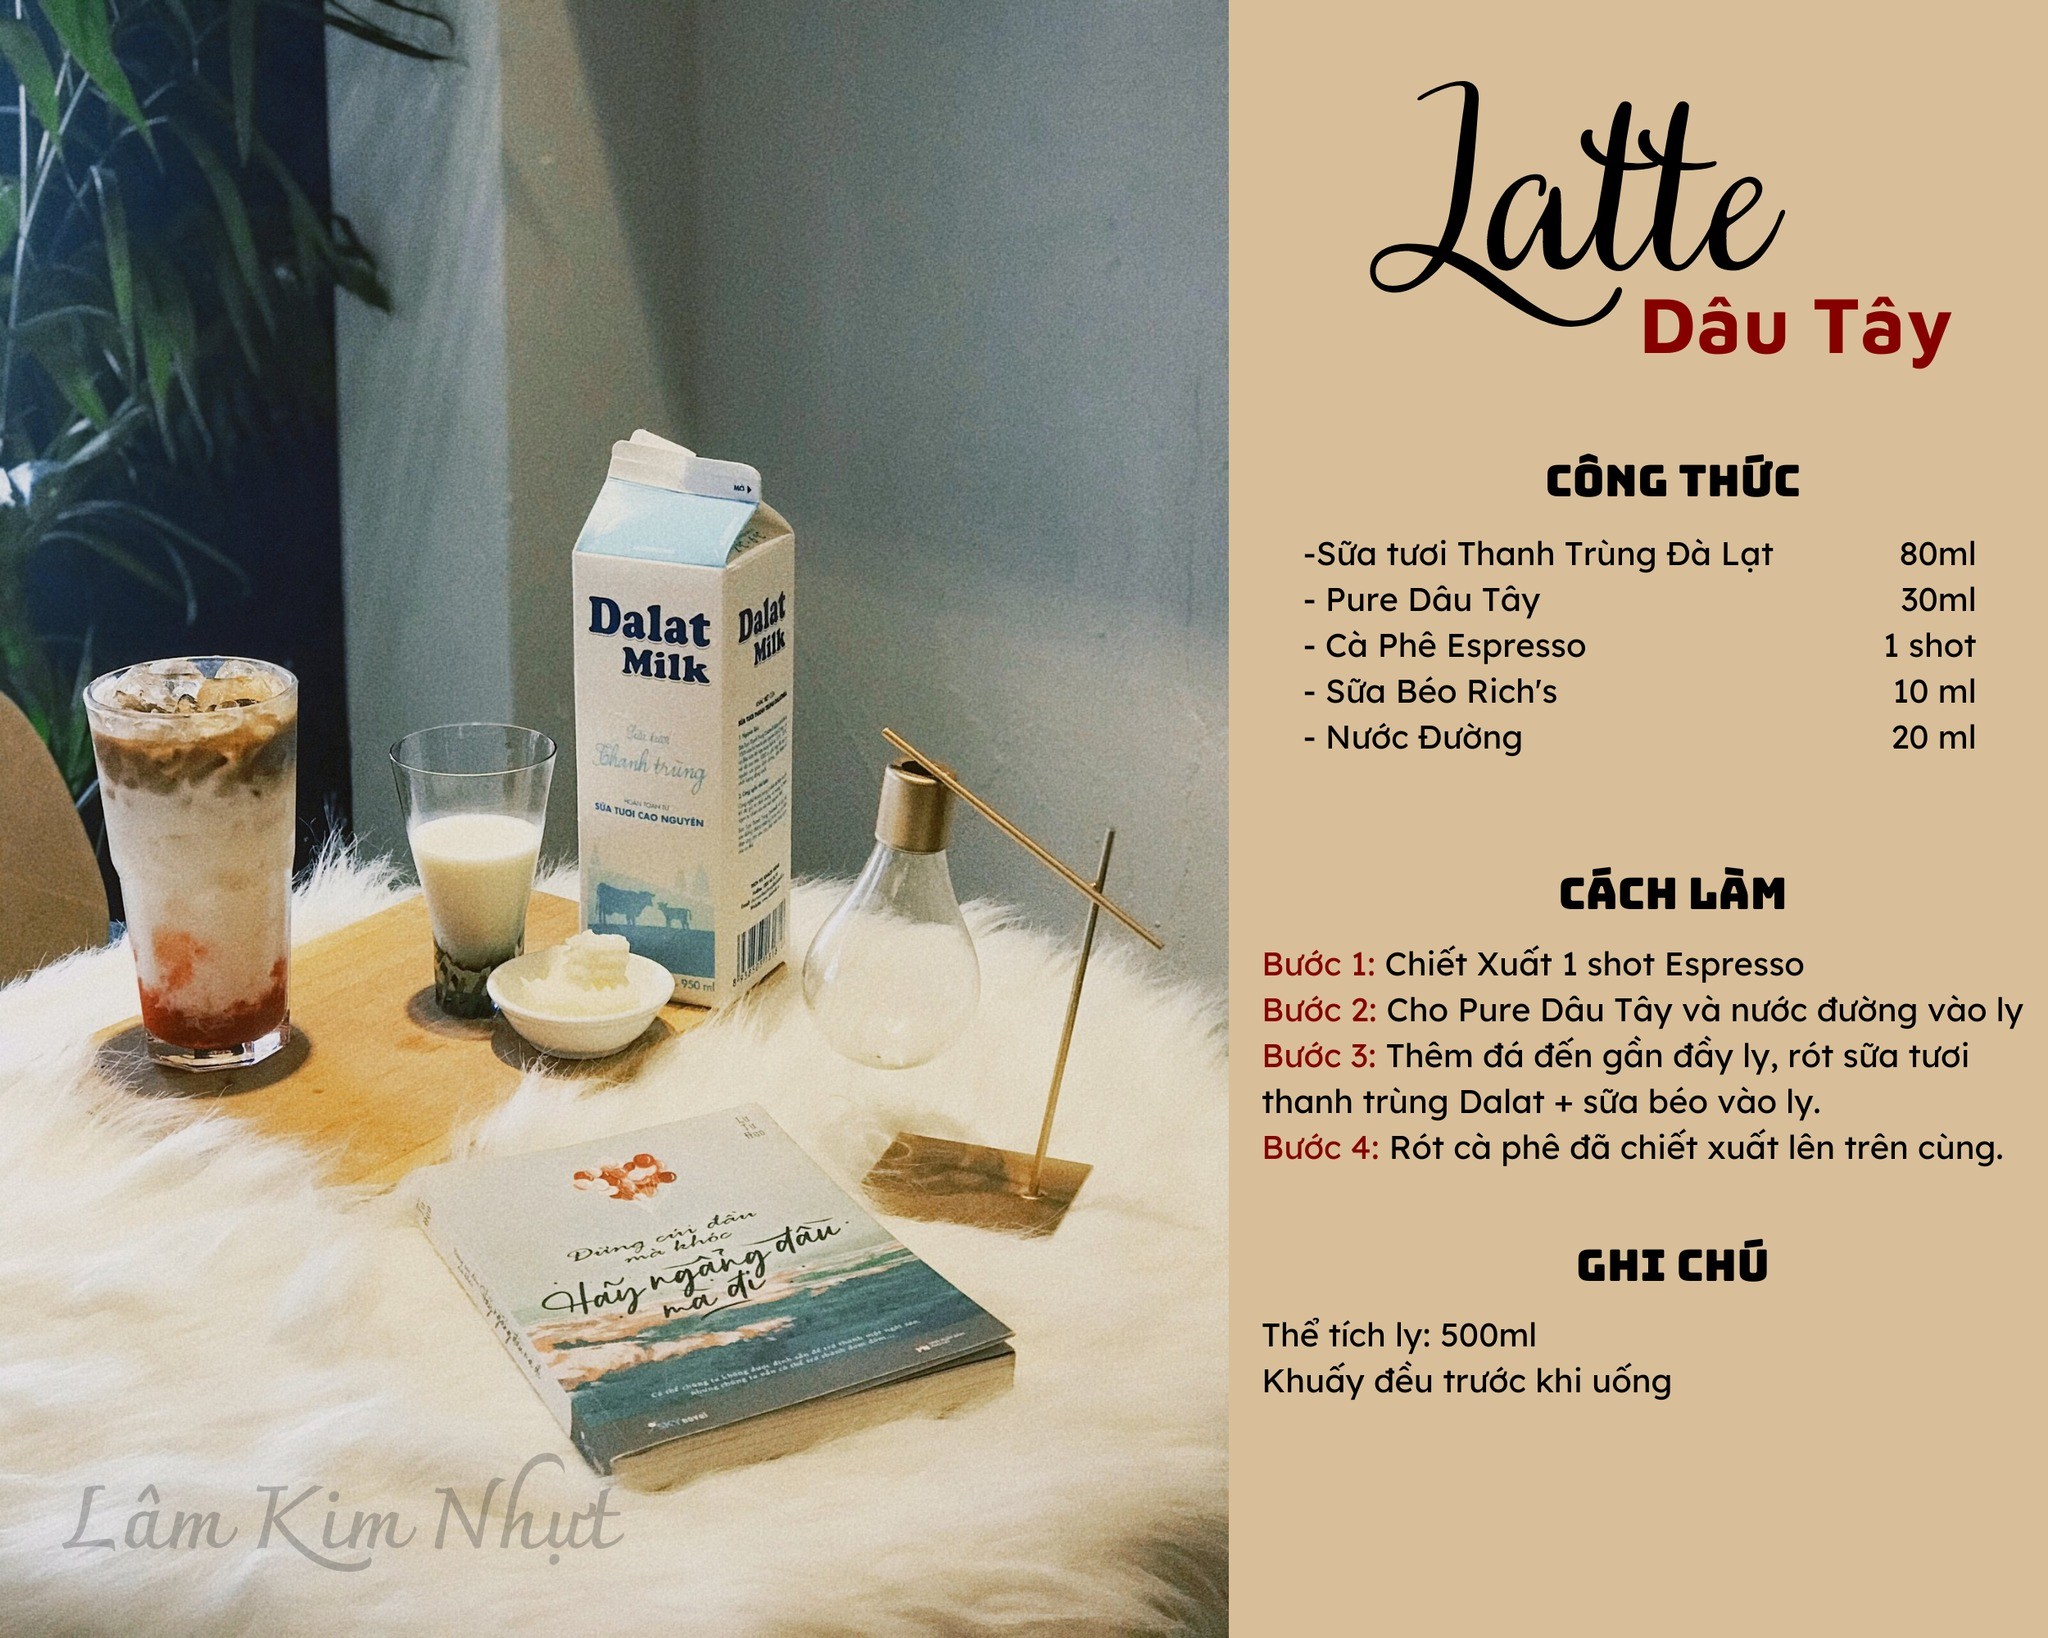 latte-dau-tay-1639020986.jpg